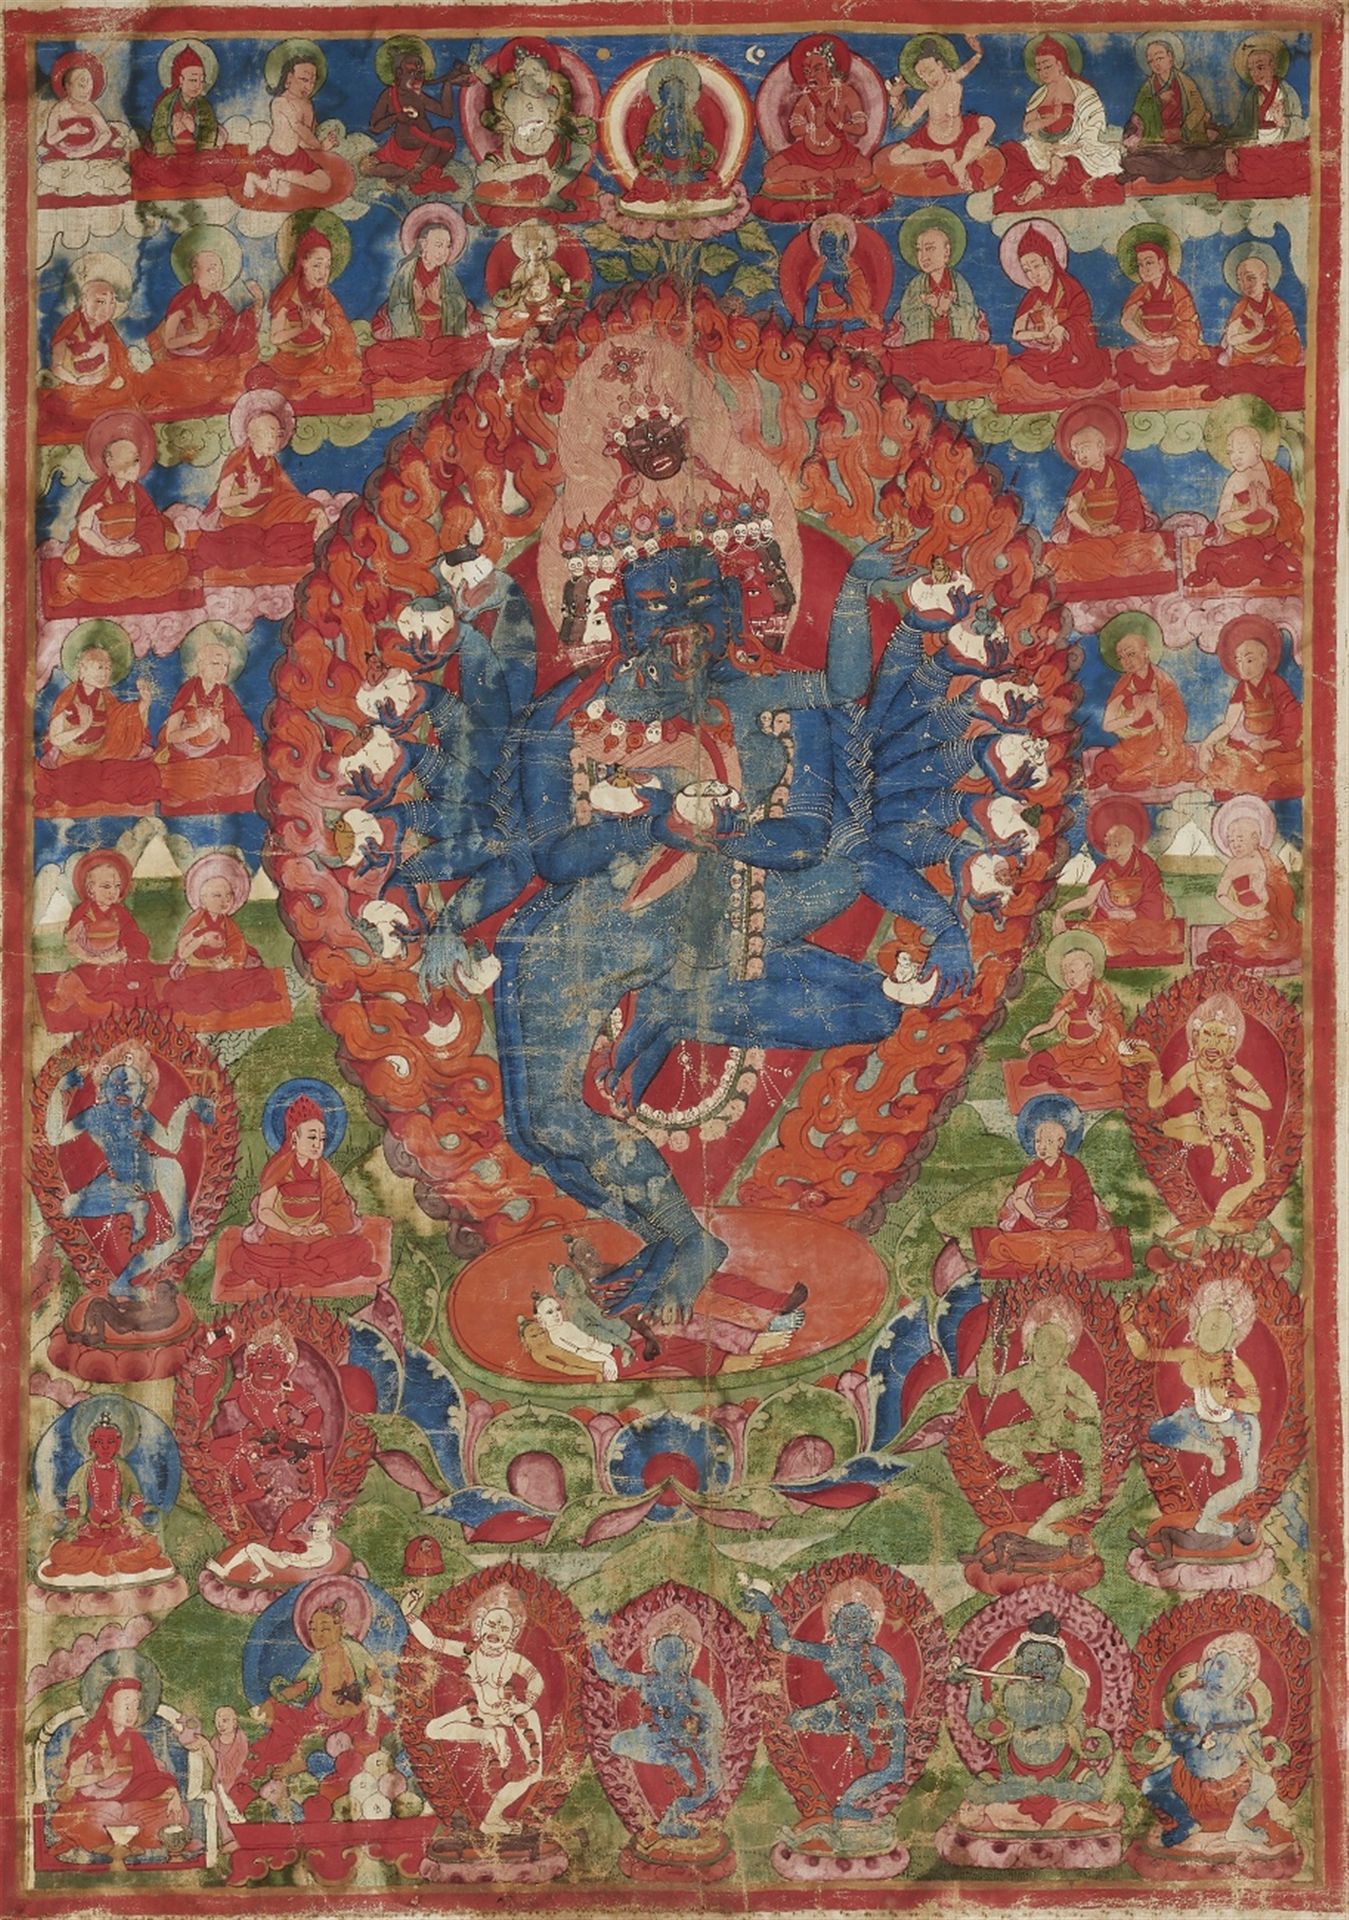 Null Importante thangka del Hevajra con Nairatmya. Tíbet. Siglo XIX.



El yidam&hellip;